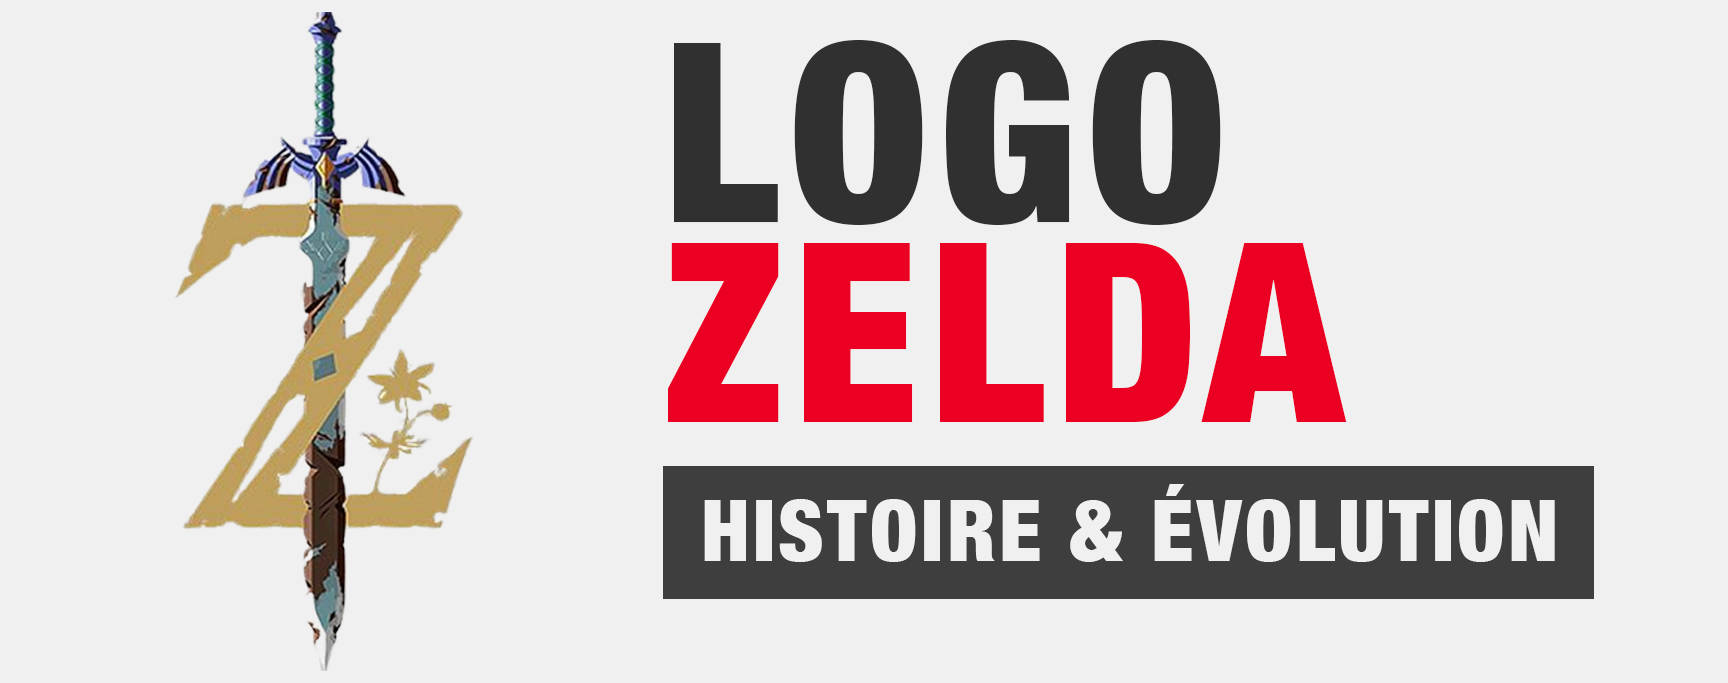 zelda logo